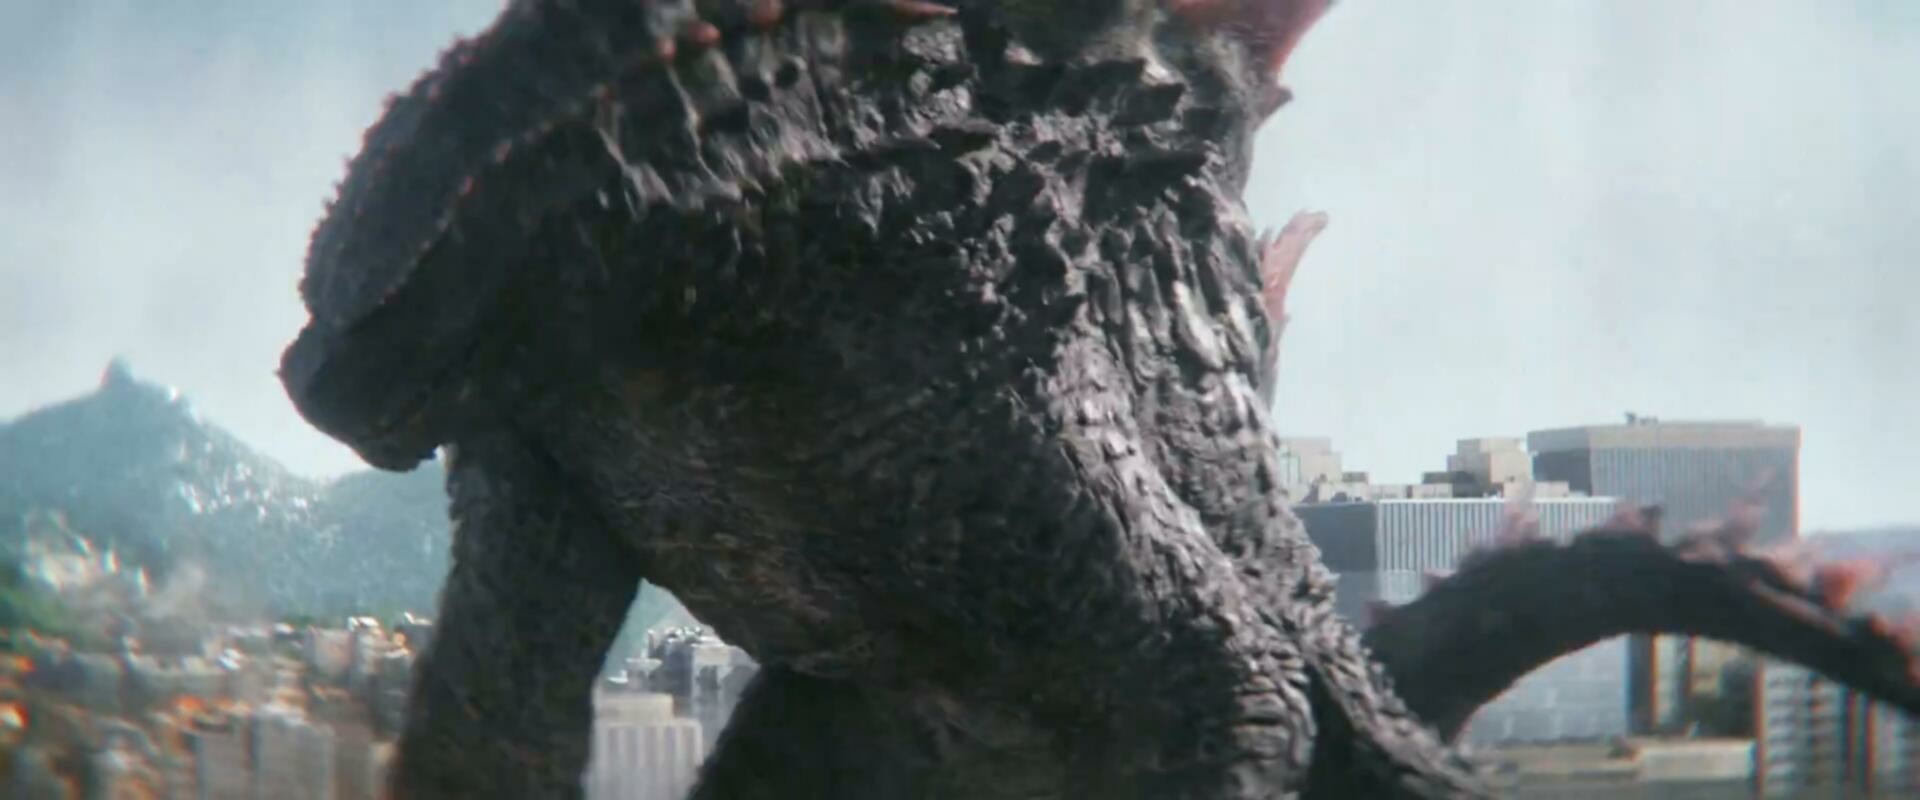 Godzilla x Kong The New Empire 2024 REPACK 1080p AMZN WEBRip 1400MB DD5 1 x264 GalaxyRG